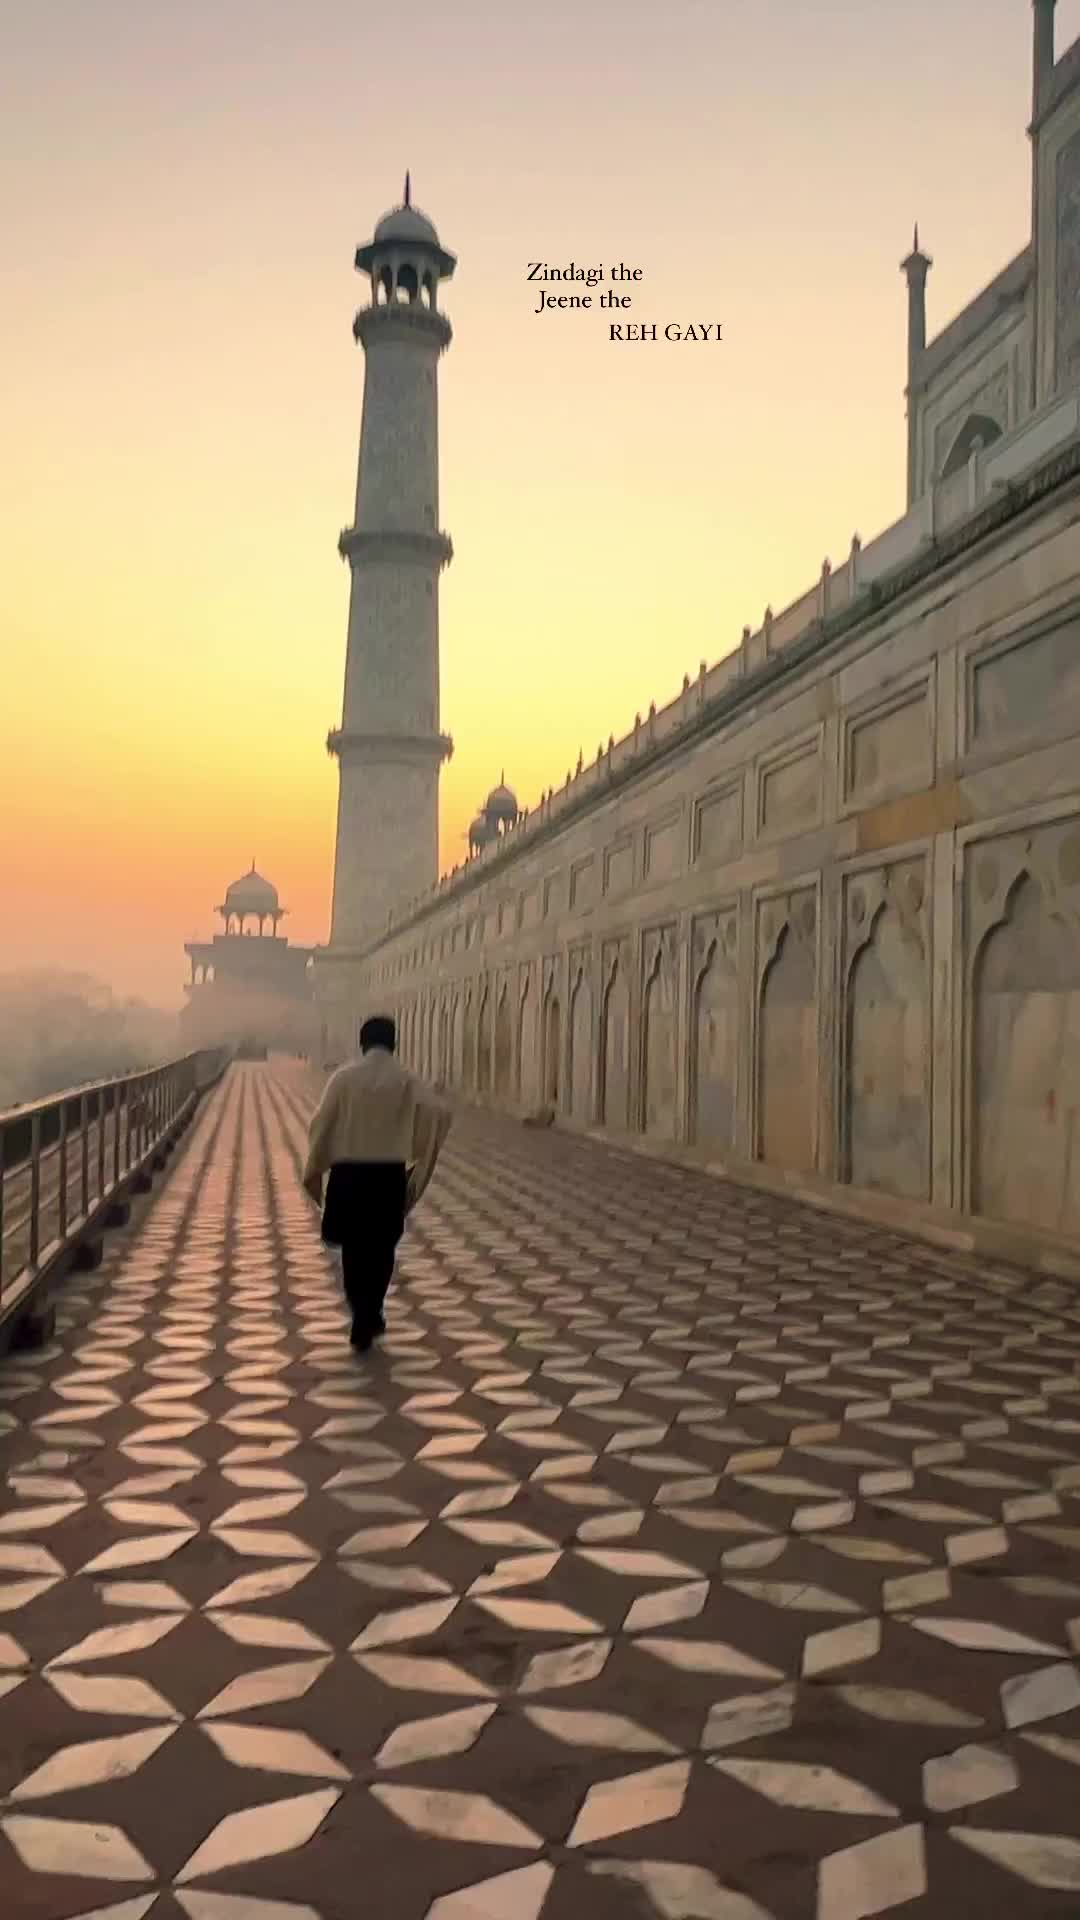 Discover the Timeless Beauty of the Taj Mahal